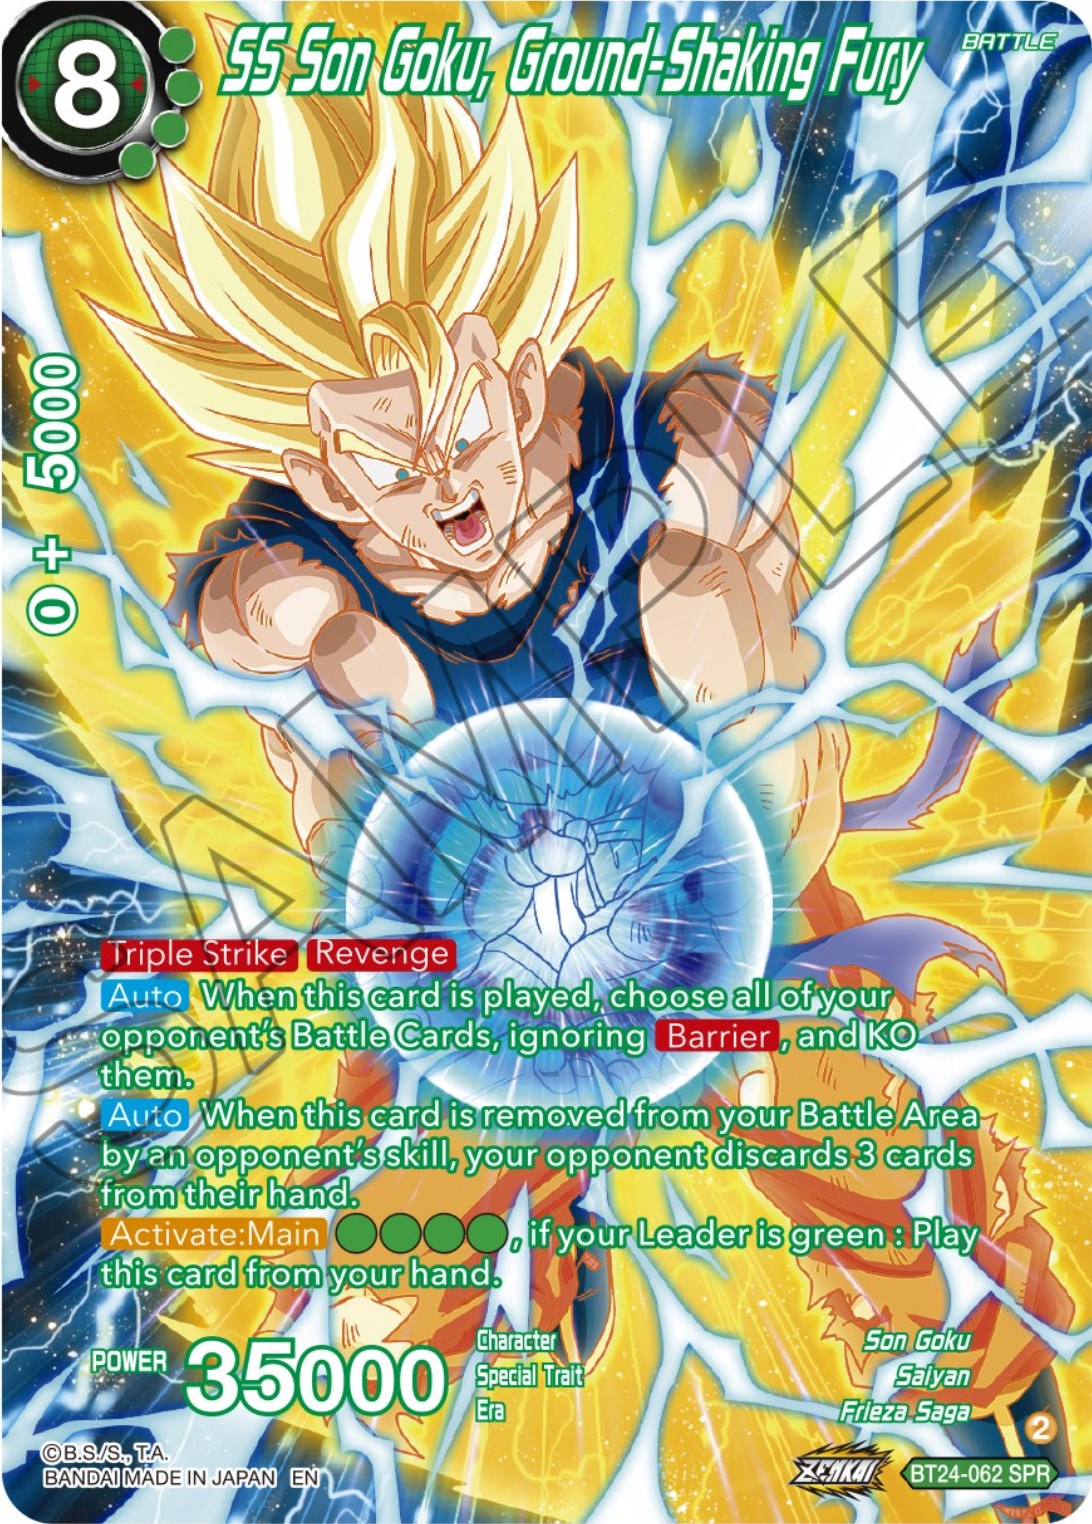 SS Son Goku, Ground-Shaking Fury (SPR) (BT24-062) [Beyond Generations] | Sanctuary Gaming